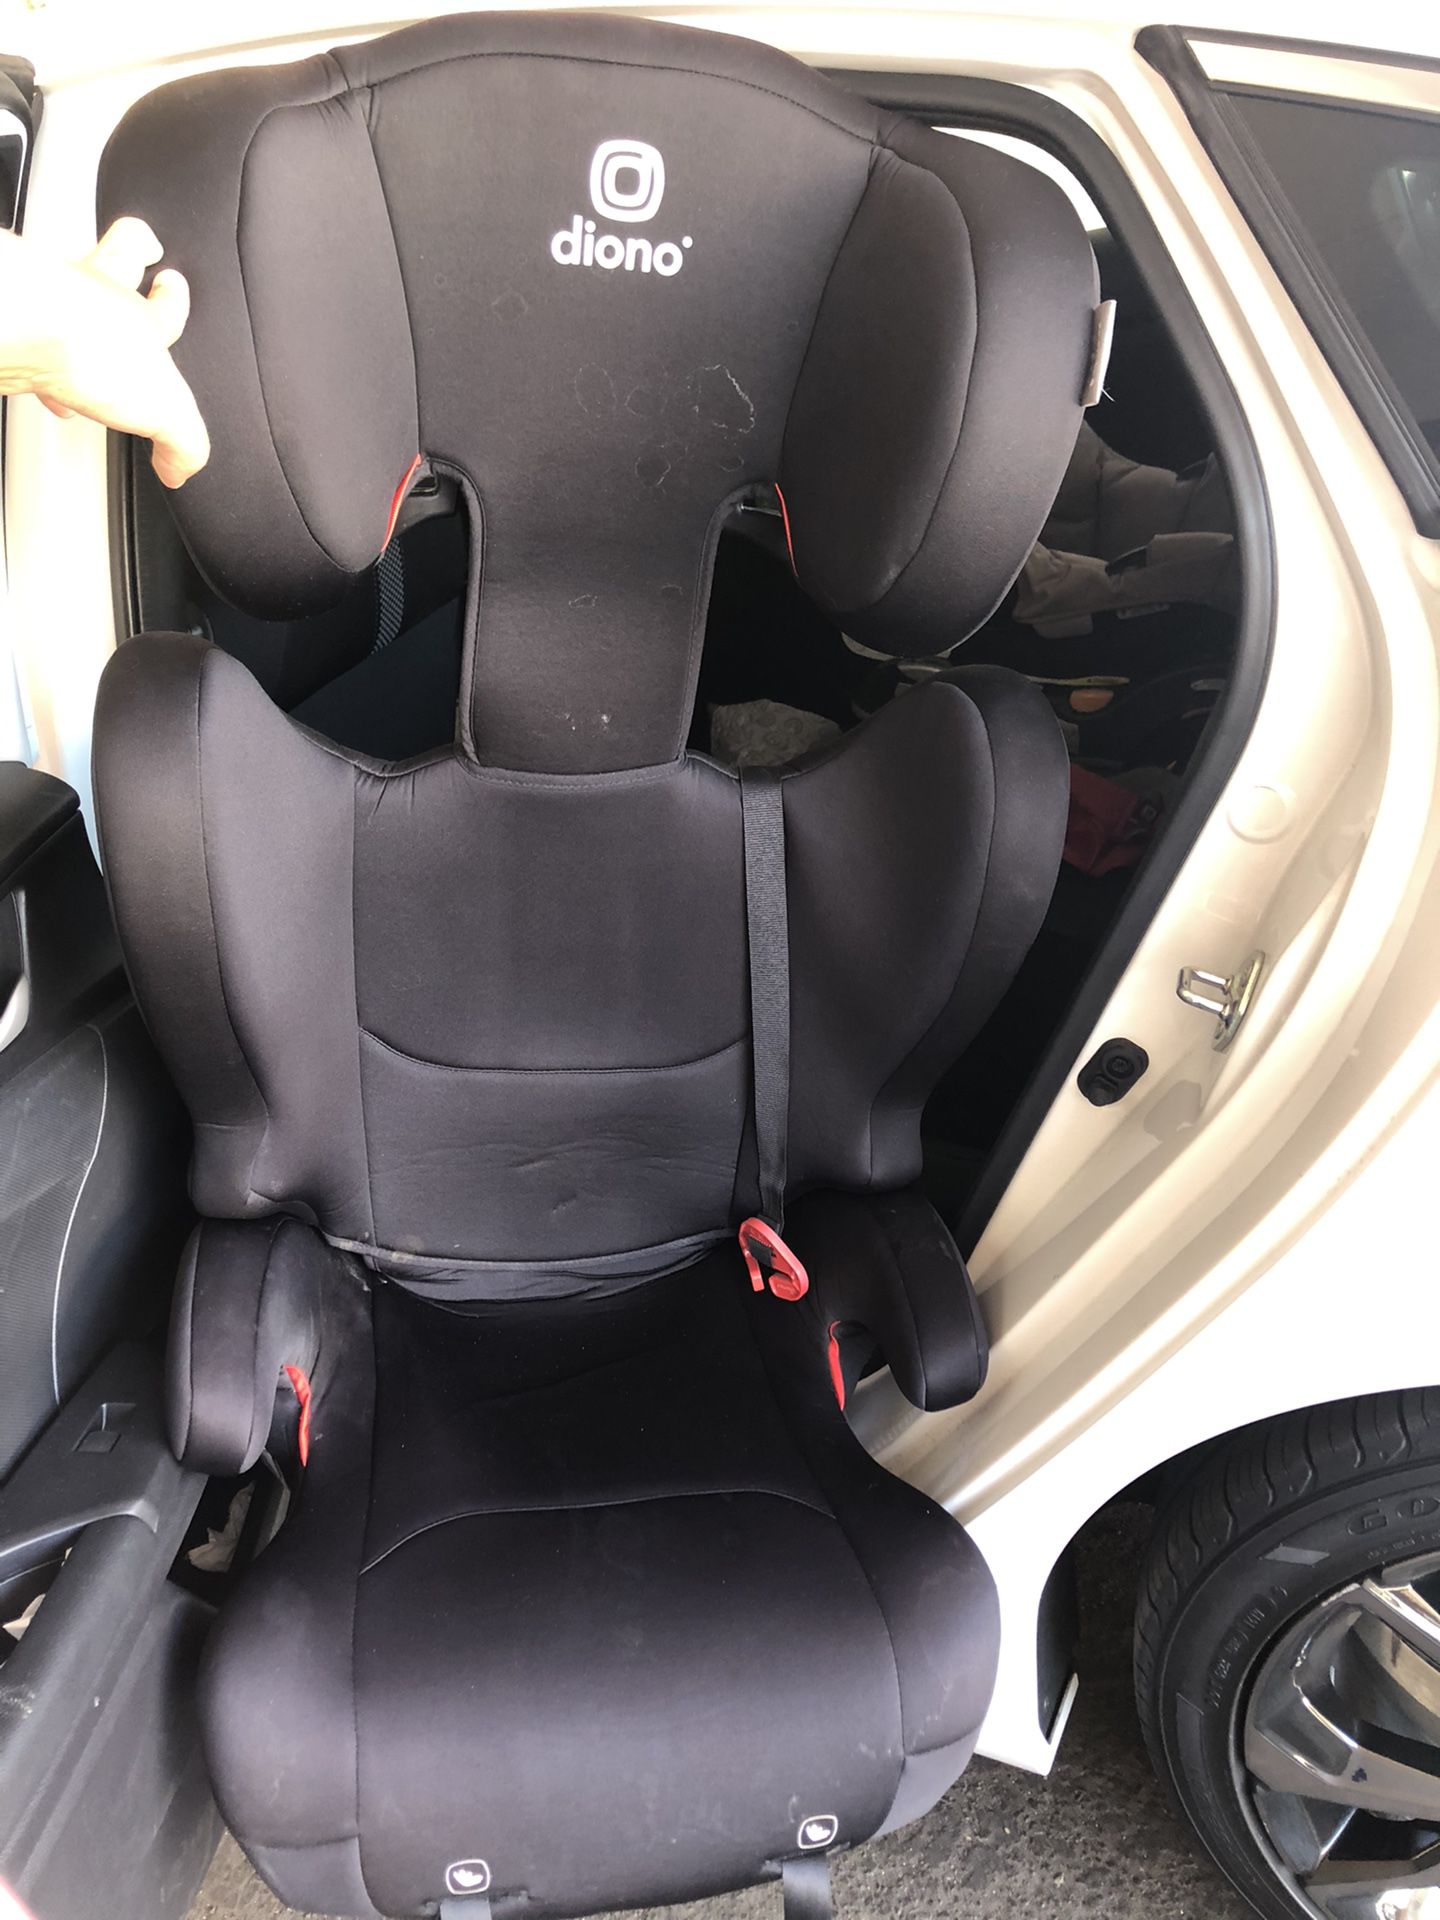 Diono booster car seat